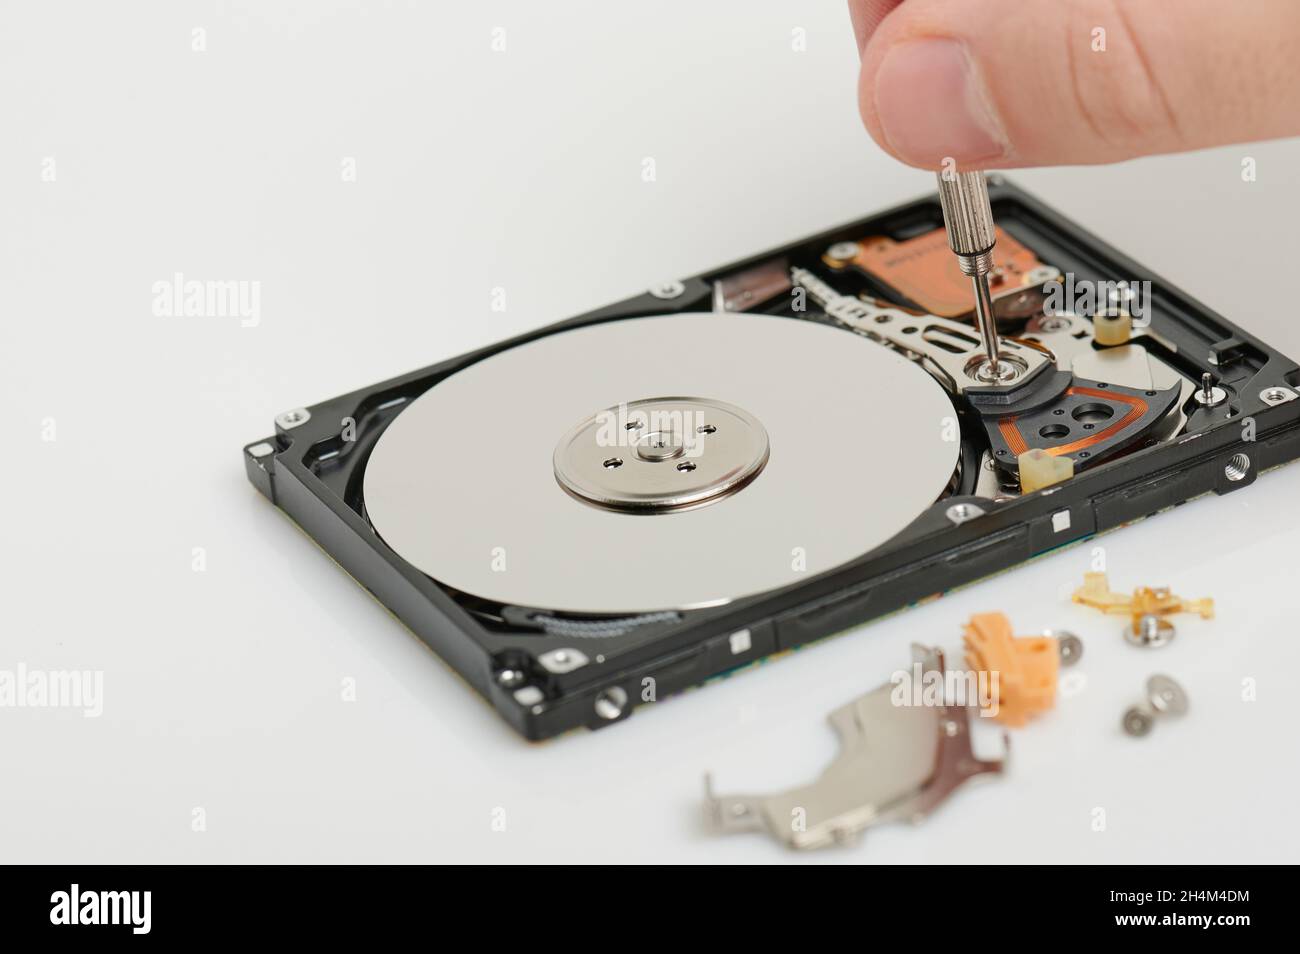 Disassembled hard drive for repair service macro close up view Stock Photo